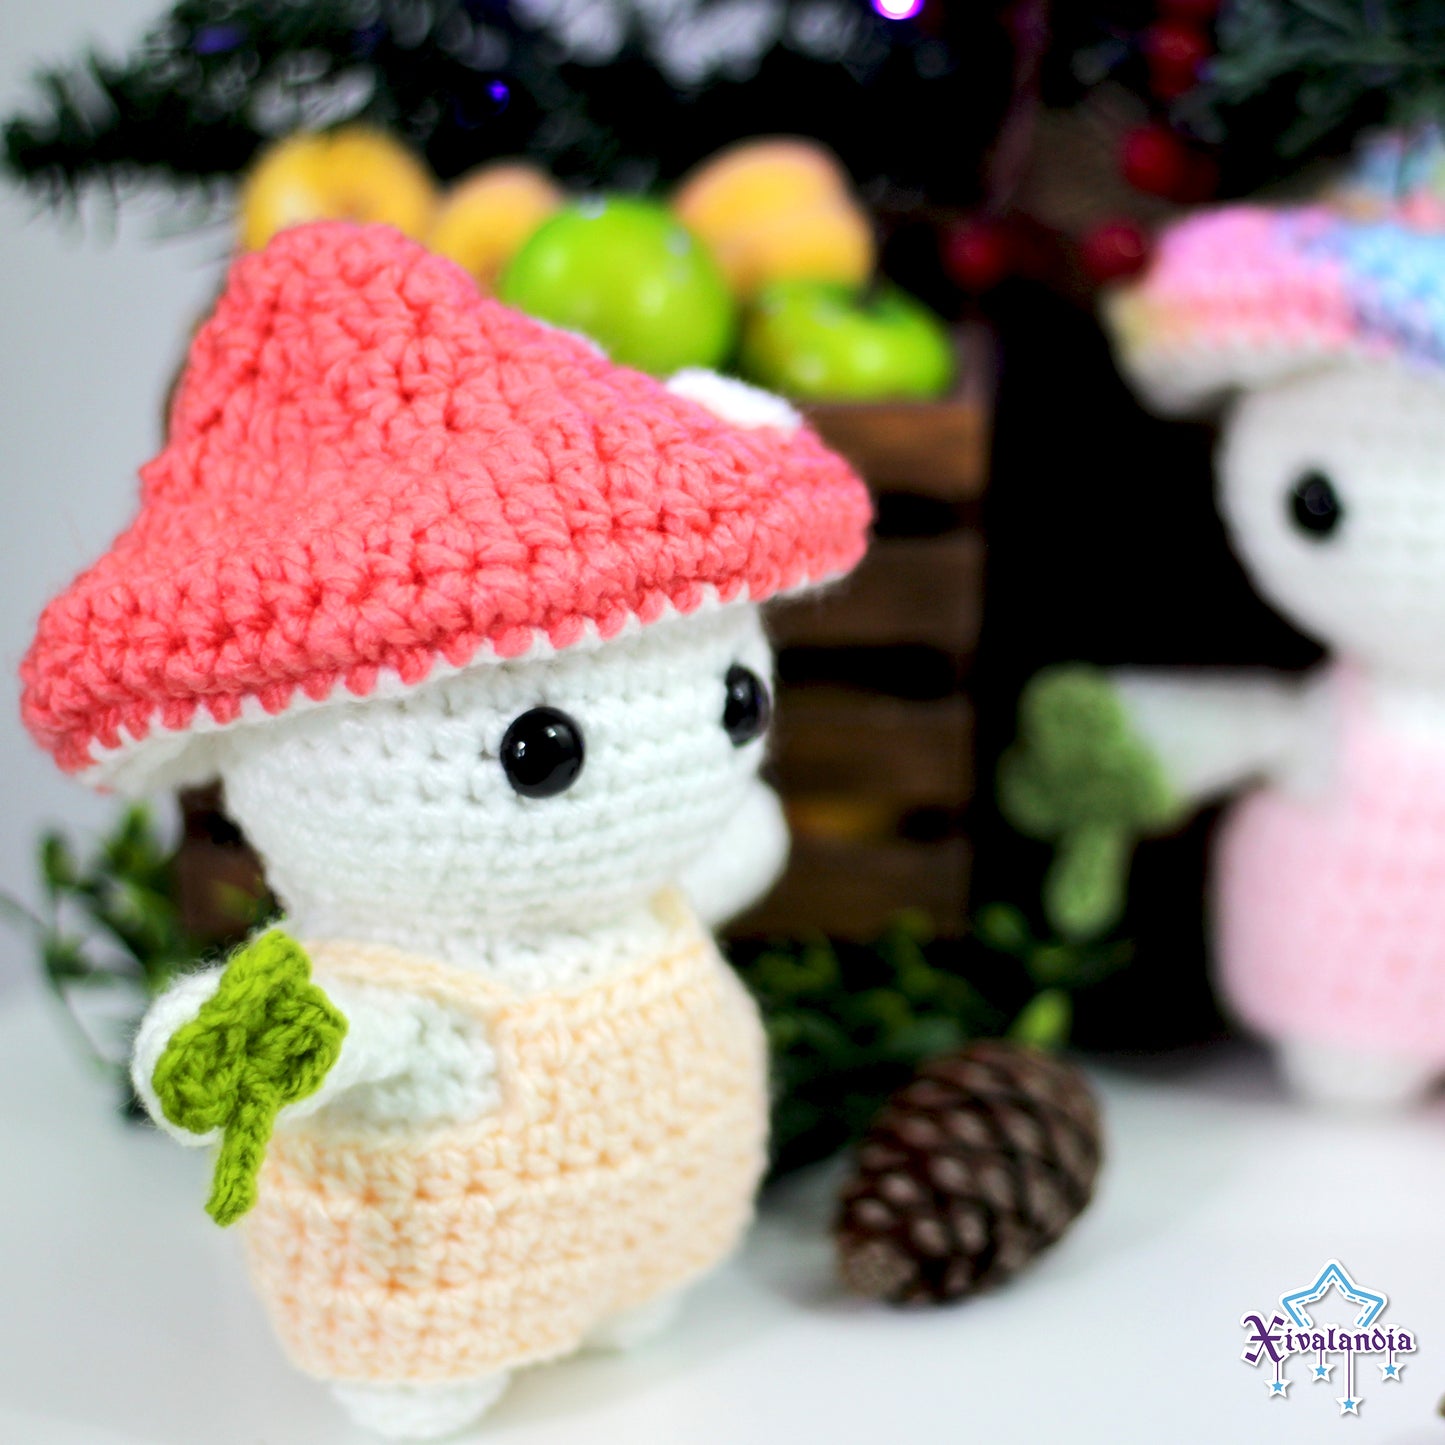 mushroom plush, toadstool crochet - 6 in/15cm - handmade amigurumi